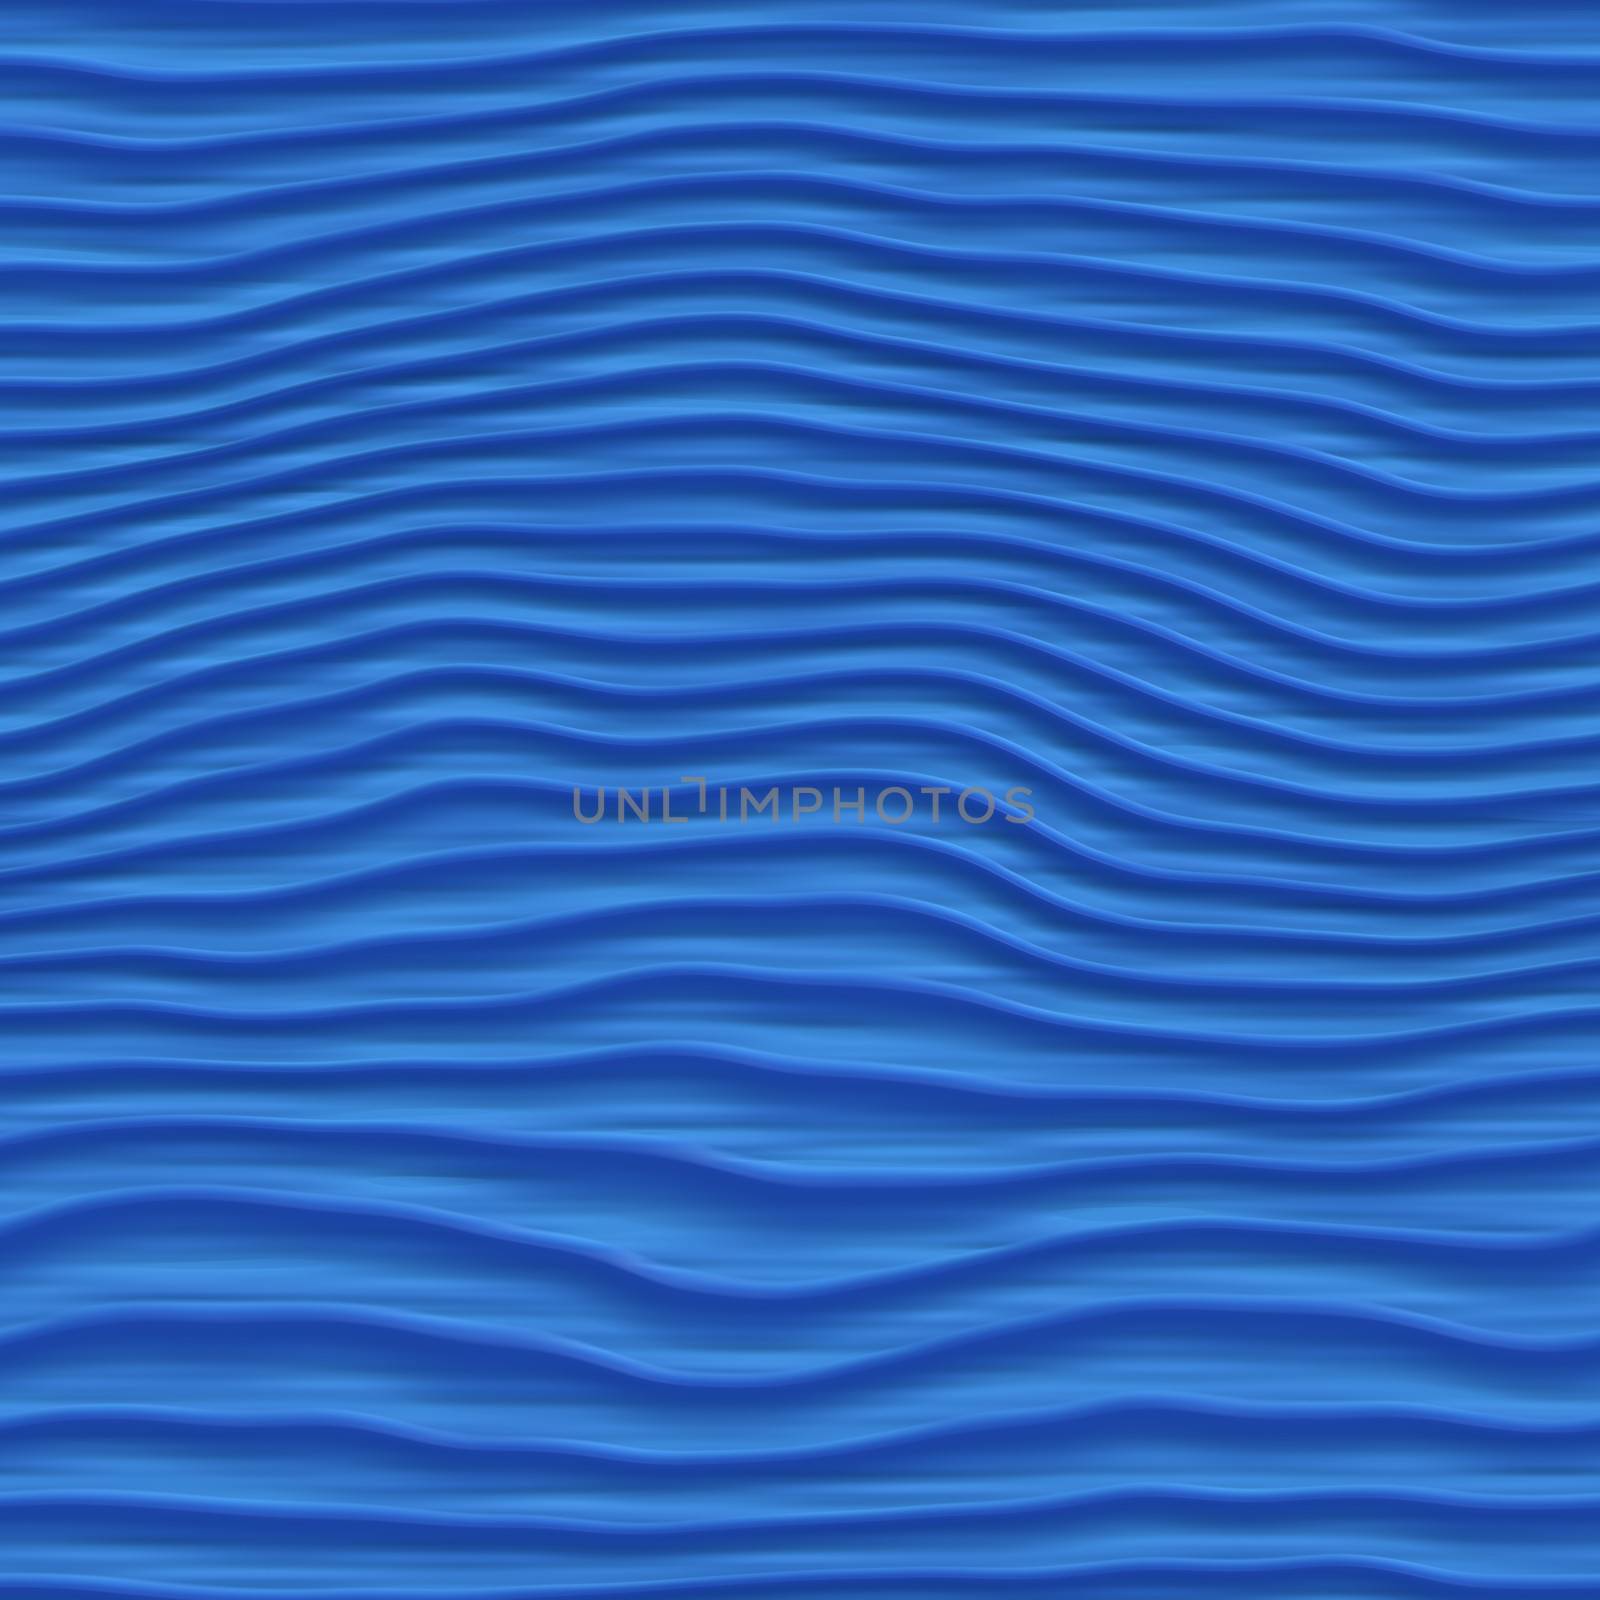 Seamless marine wave patterns